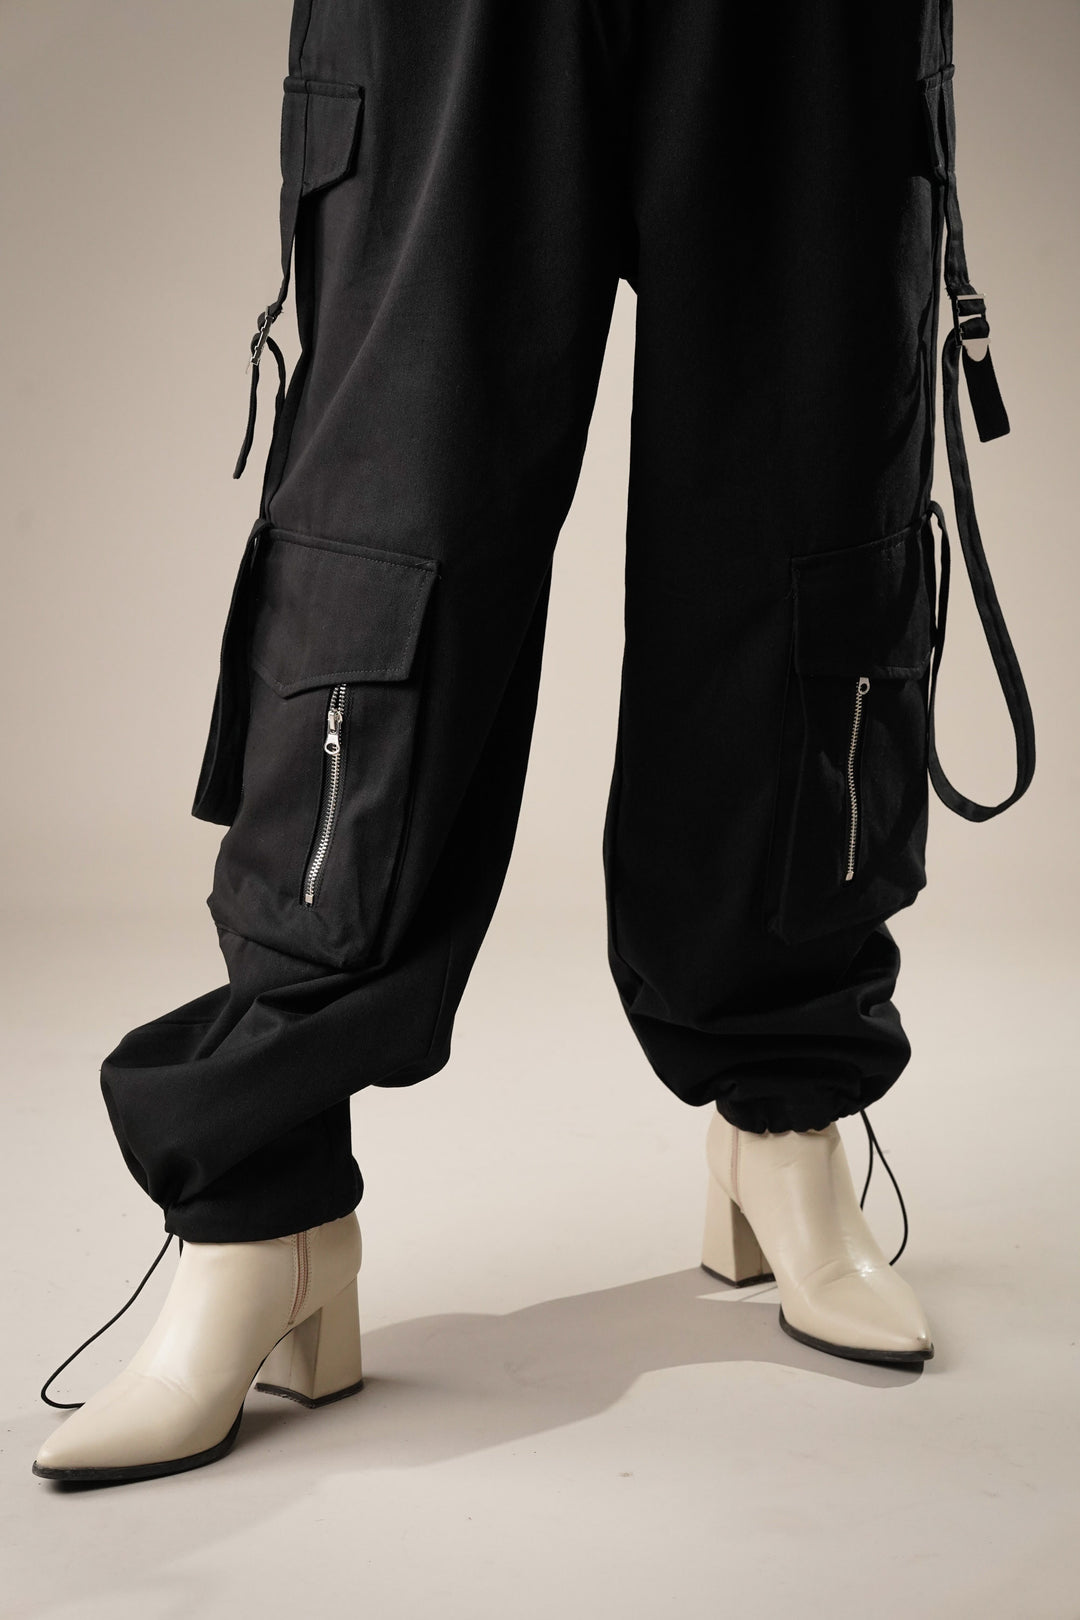 Black cargo pants for urban fashion